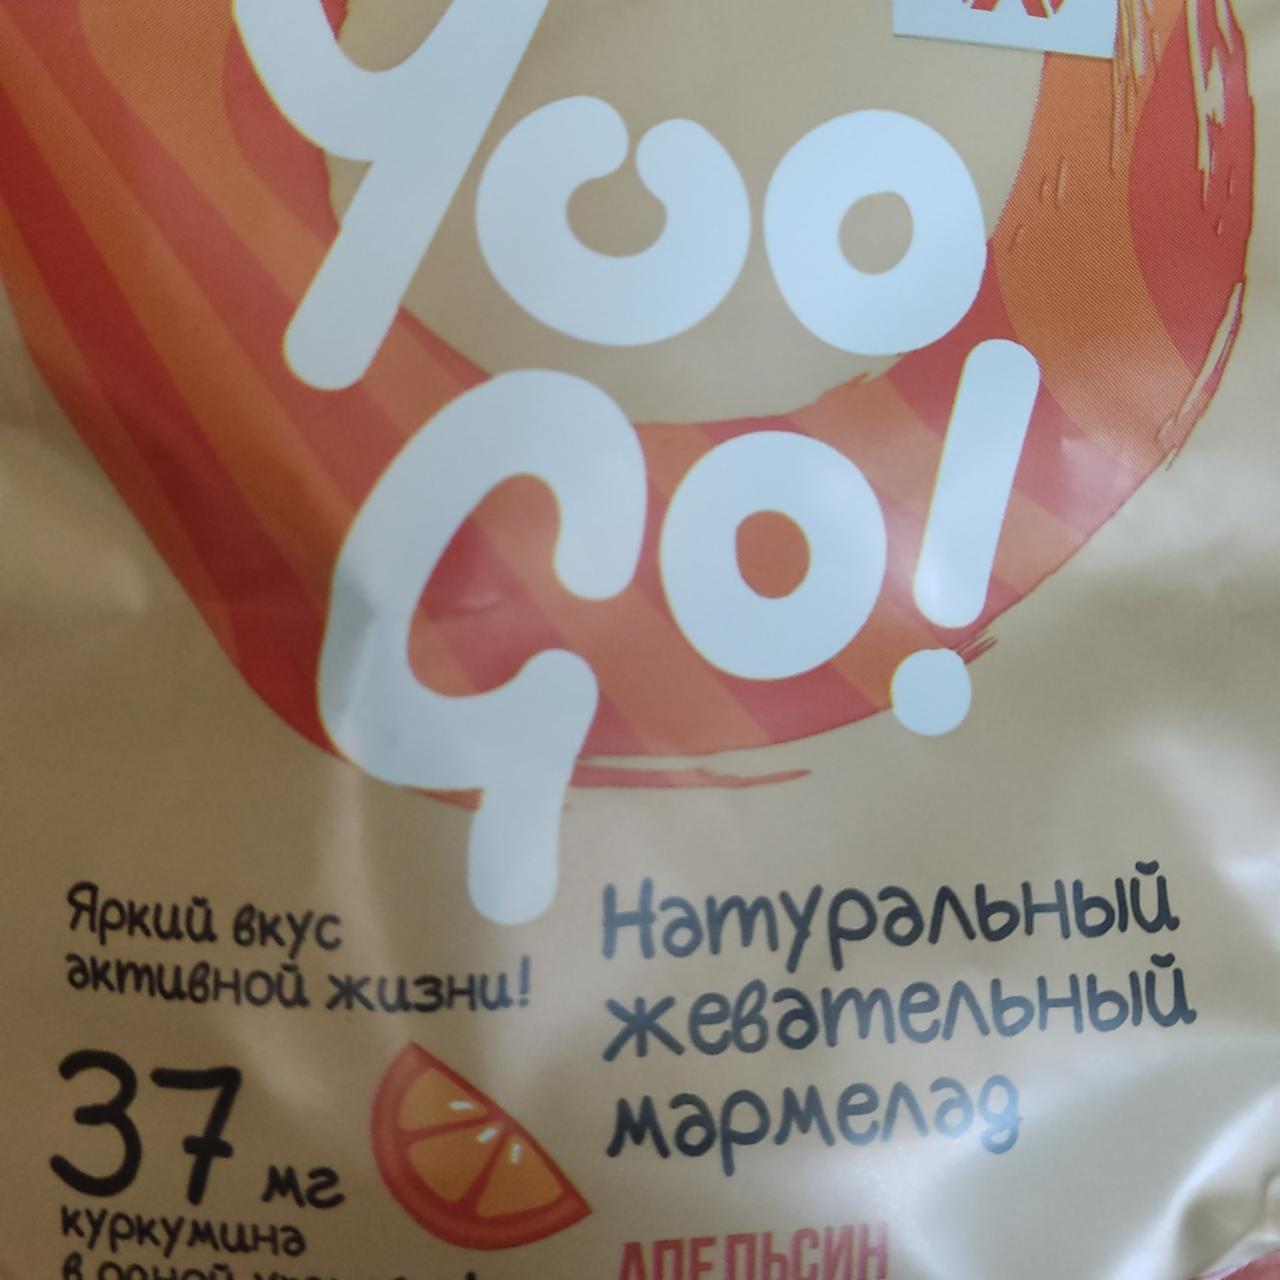 Фото - мармелад со вкусом апельсина Yoo Go!